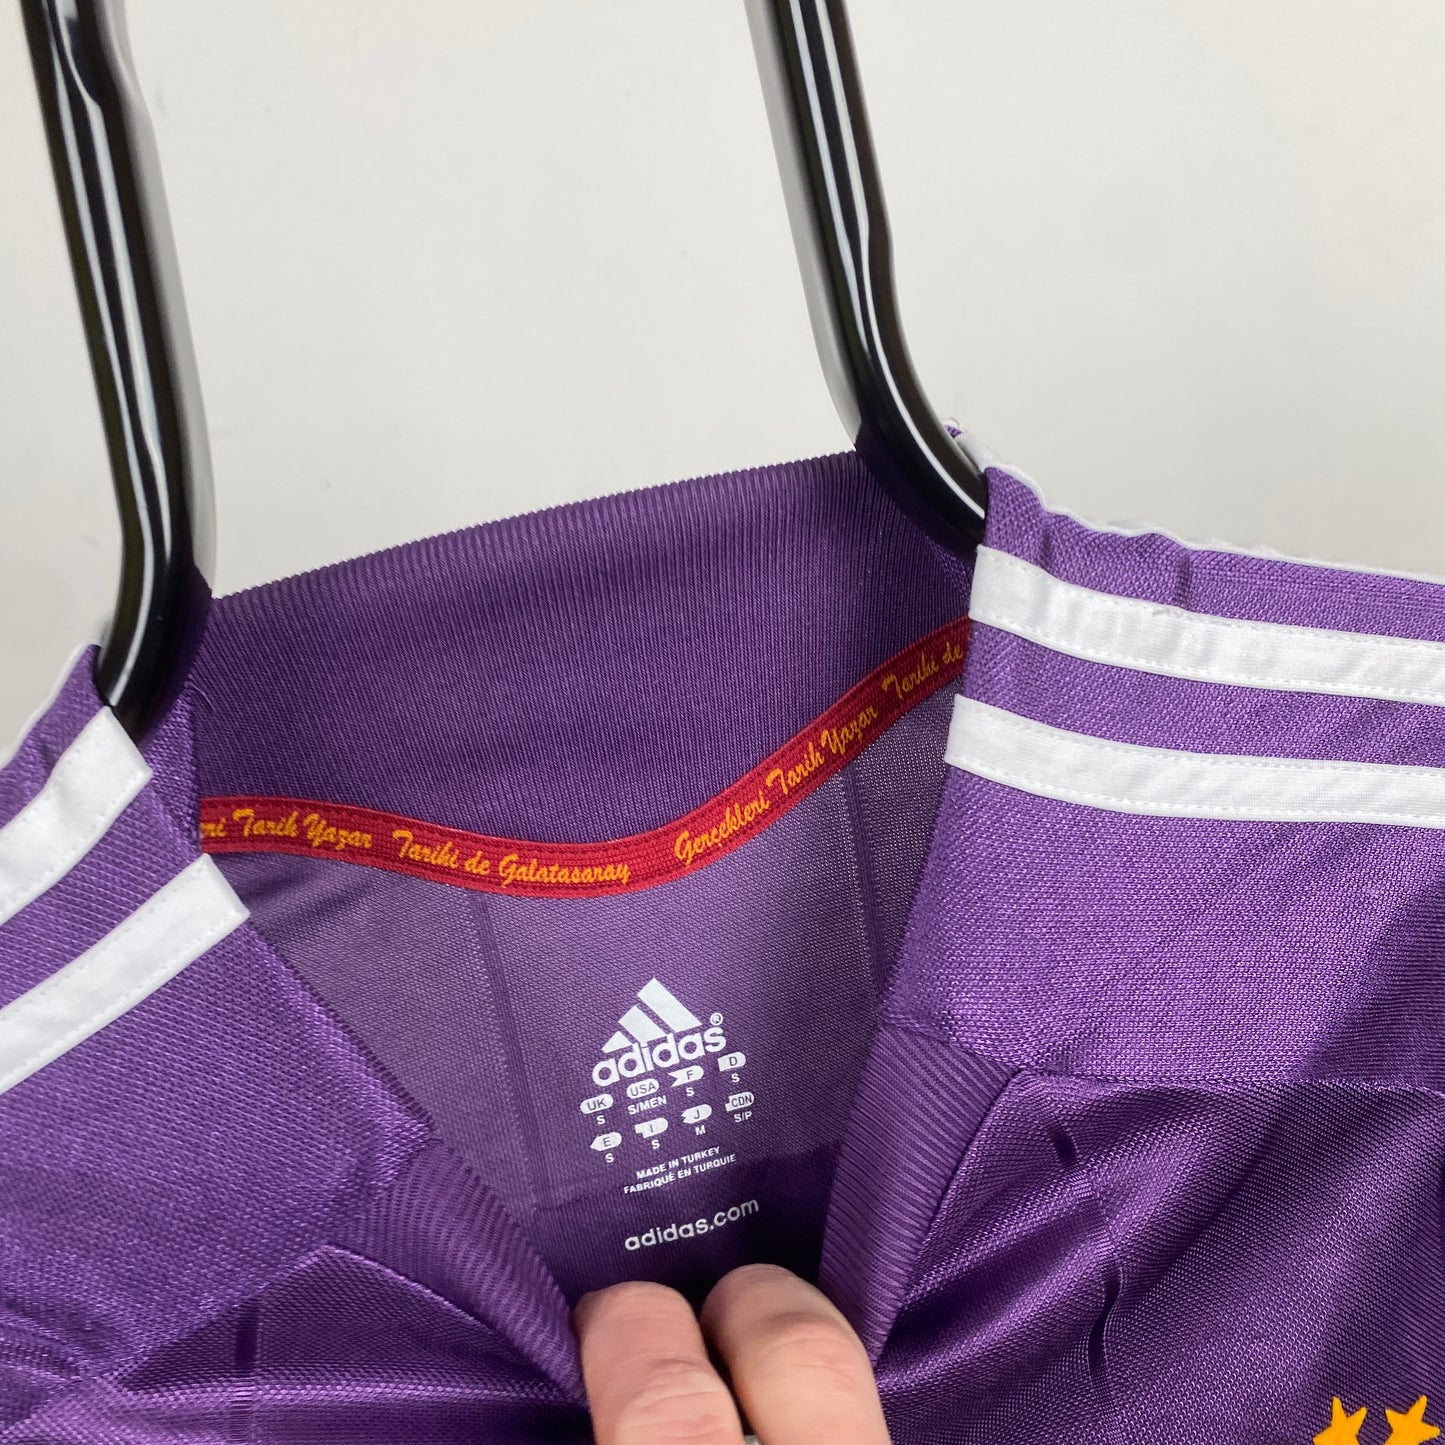 00s Adidas Galatasaray Football Shirt T-Shirt Purple Small